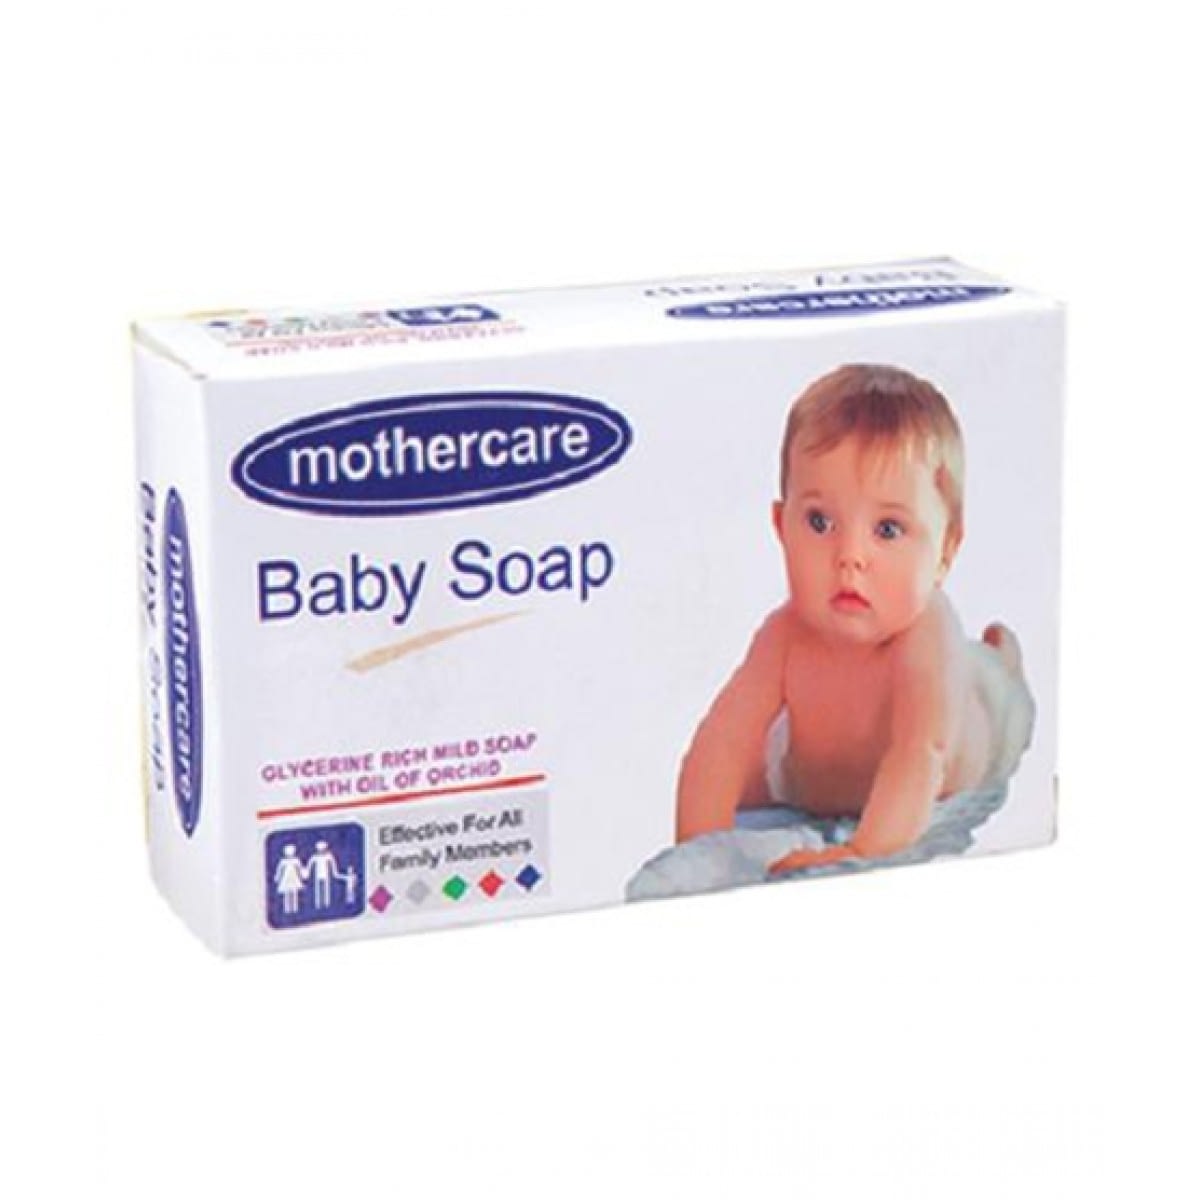 MOTHERCARE BABY SOAP 80G - Alwardah